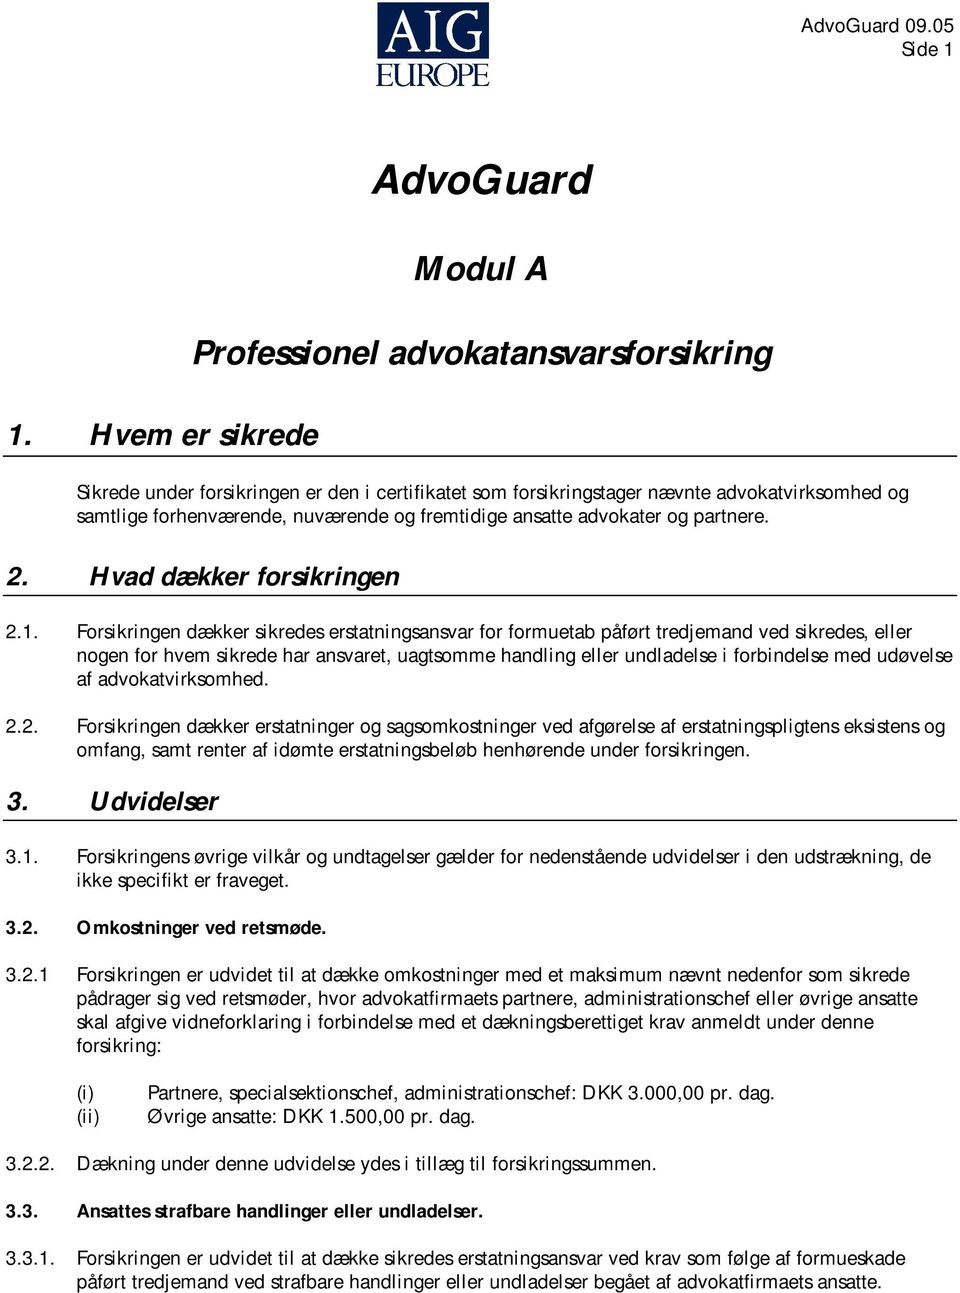 AdvoGuard. Modul A. Professionel advokatansvarsforsikring - PDF Gratis  download